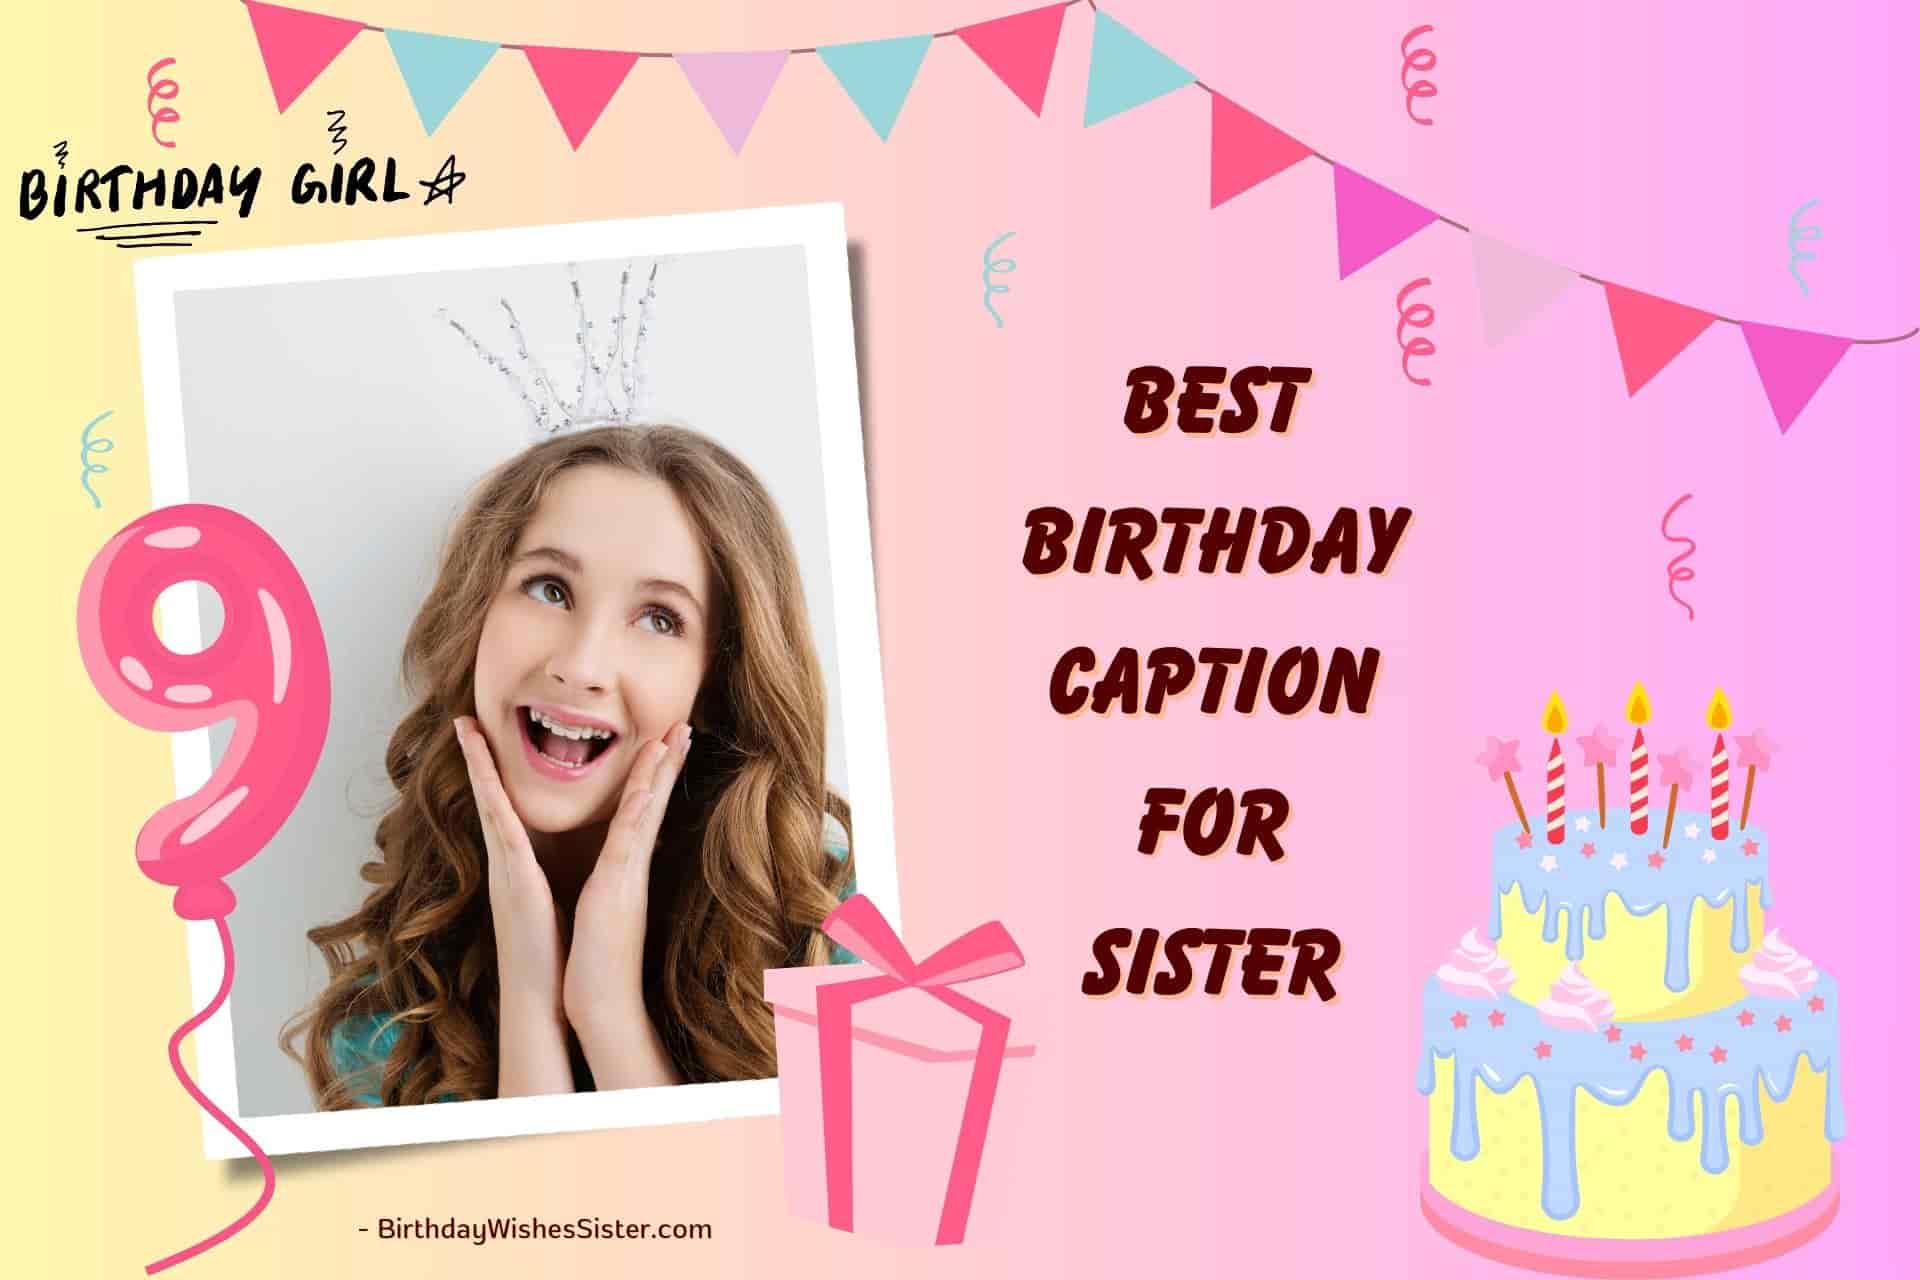 Best Birthday Caption For Sister